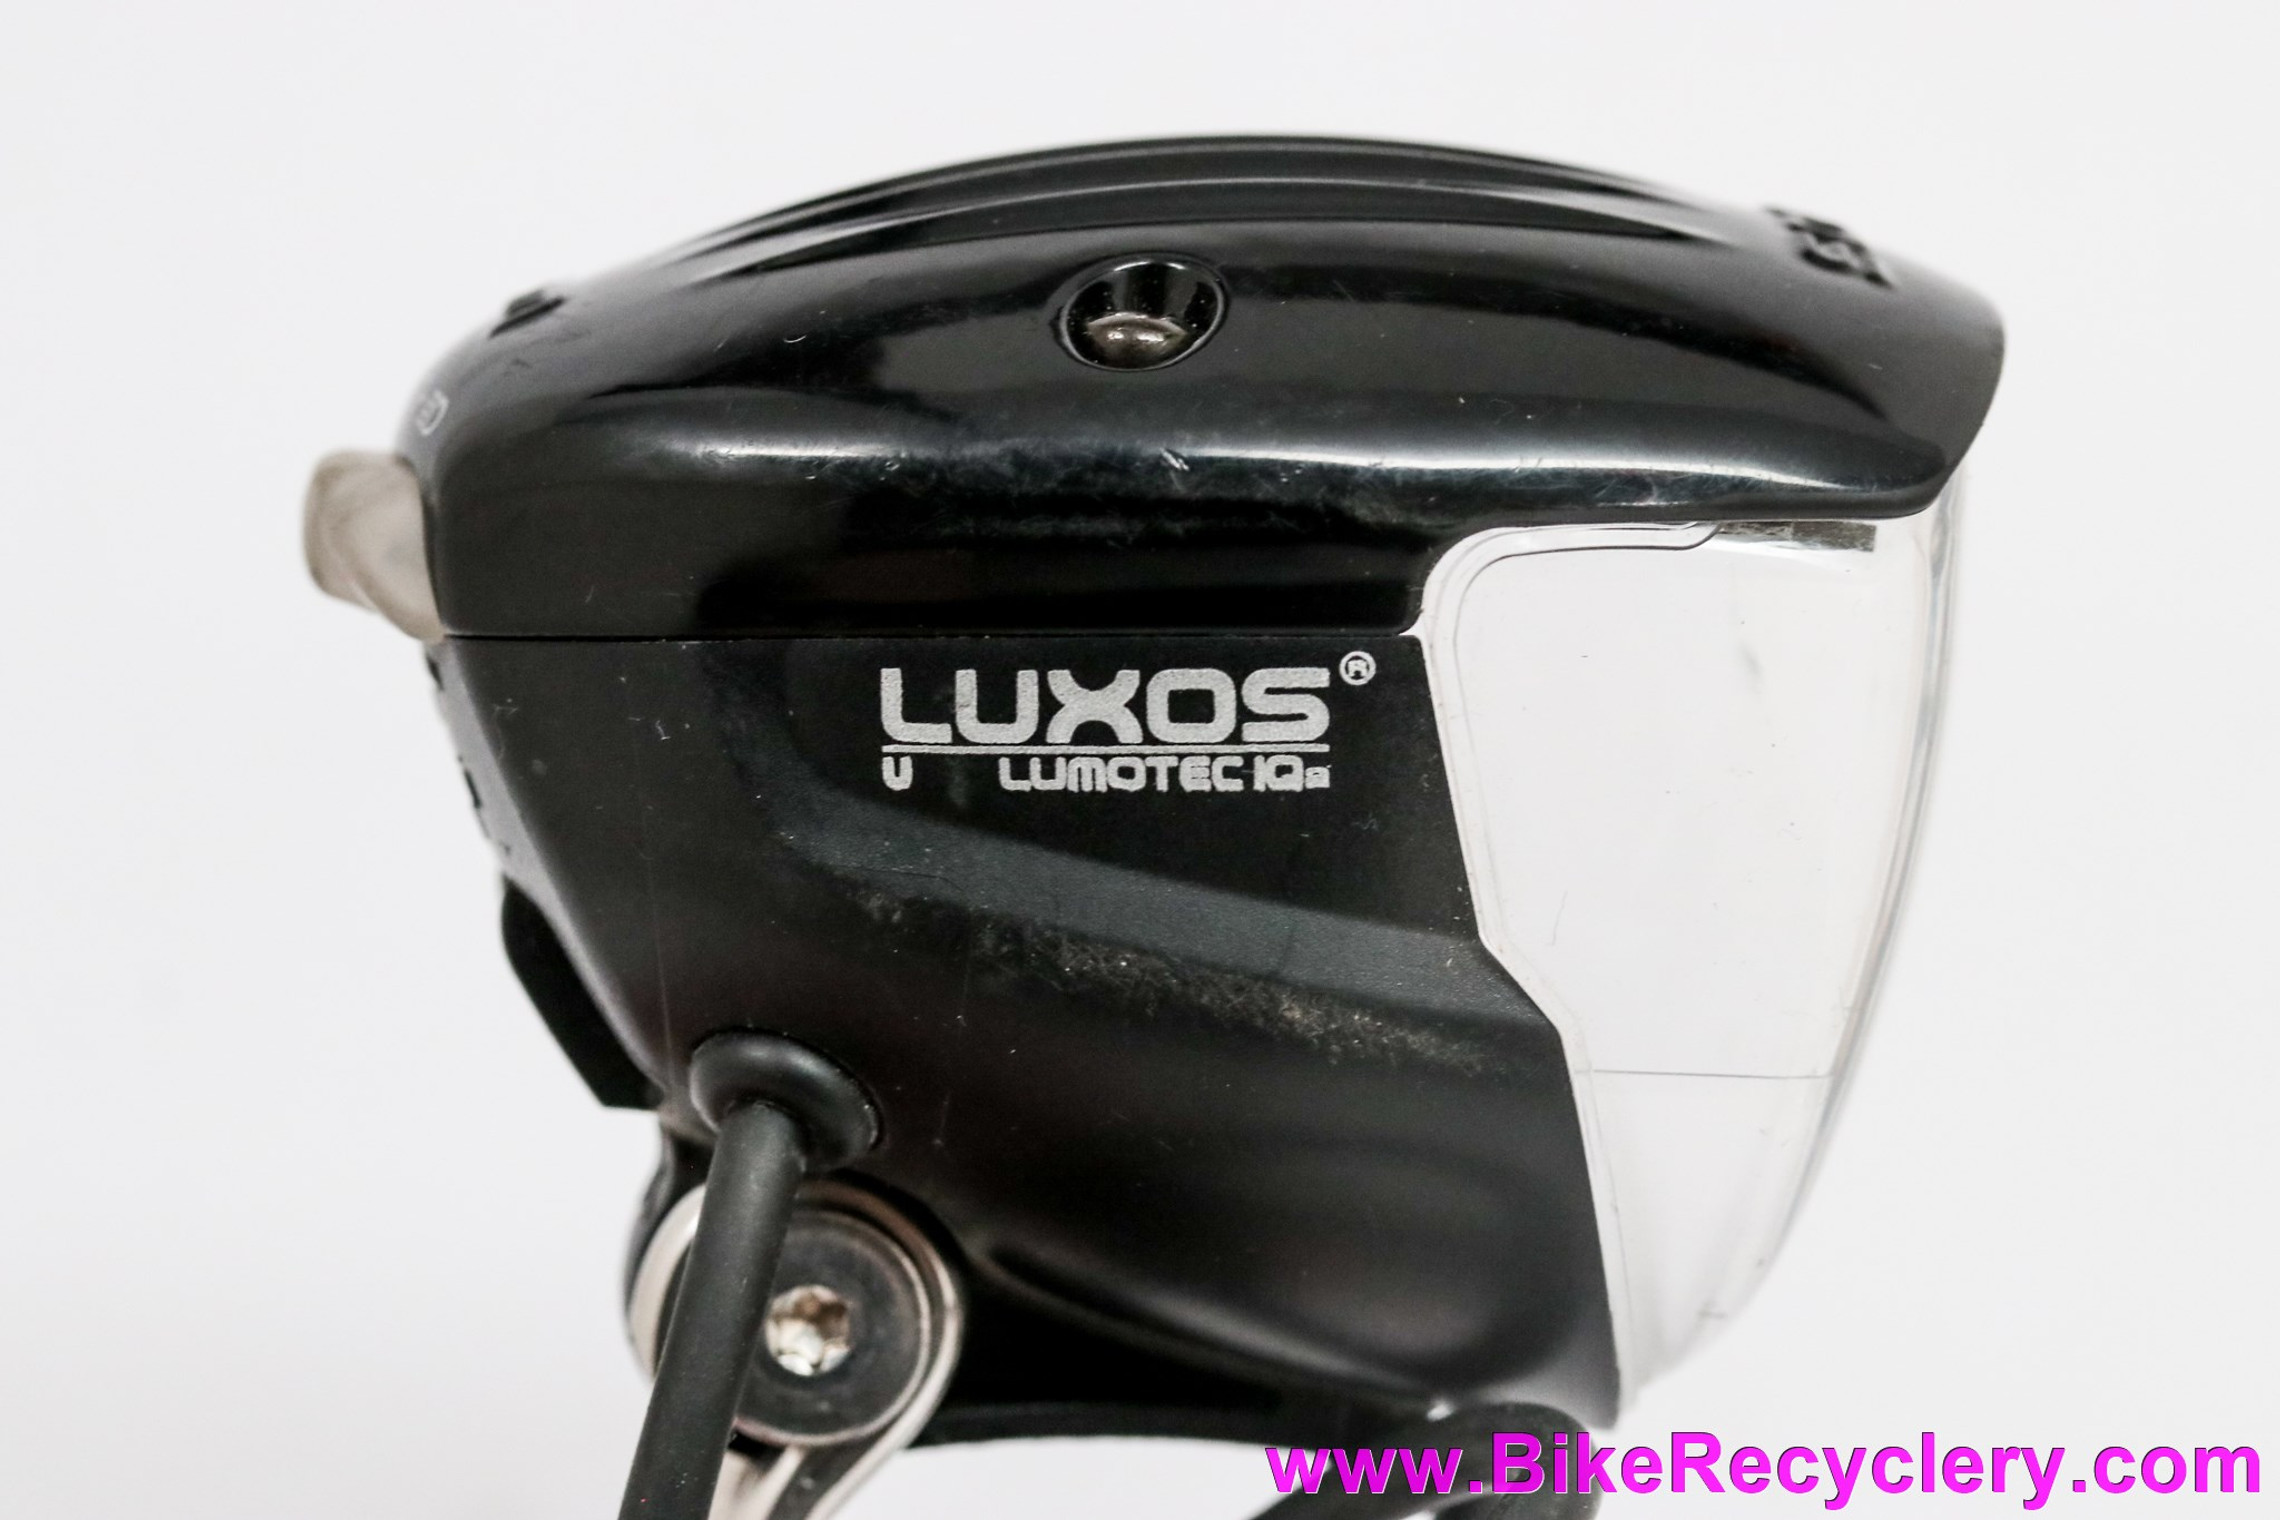 Conform materiaal Feat B&M Lumotec IQ2 Luxos U Dynamo Headlamp (Near Mint) - Bike Recyclery